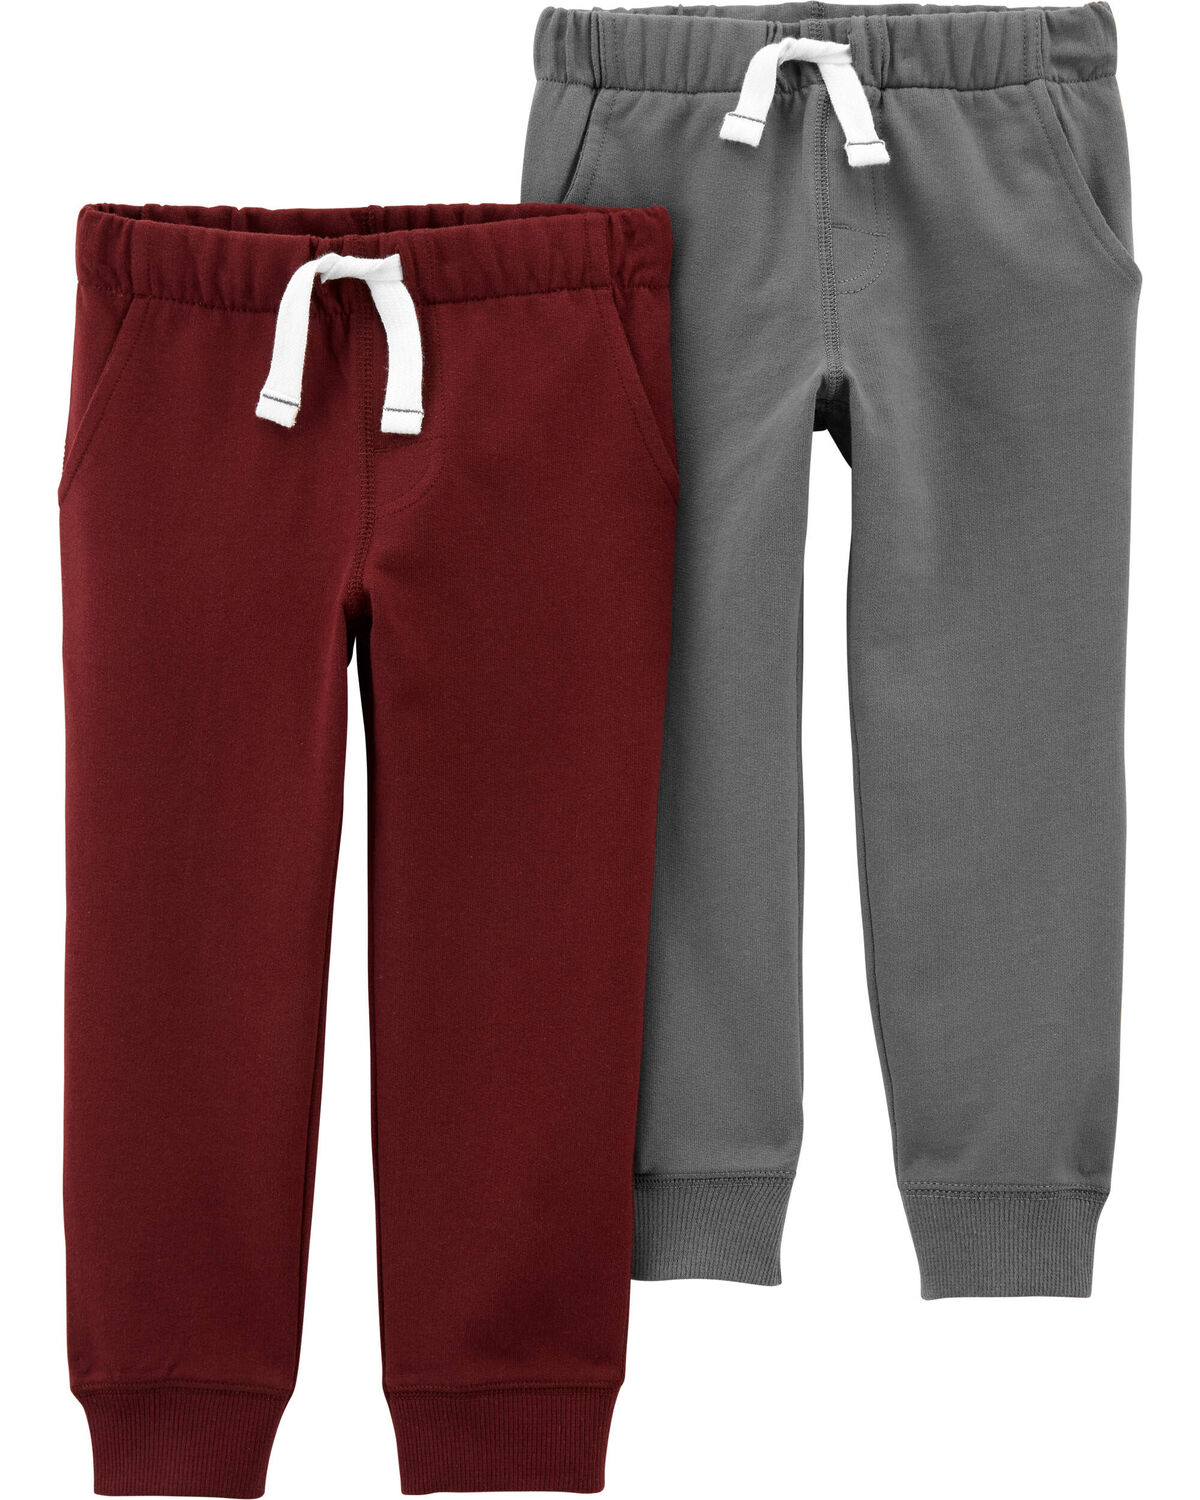 Maroon/Grey Toddler Basic 2-Pack Jogger Pants | carters.com